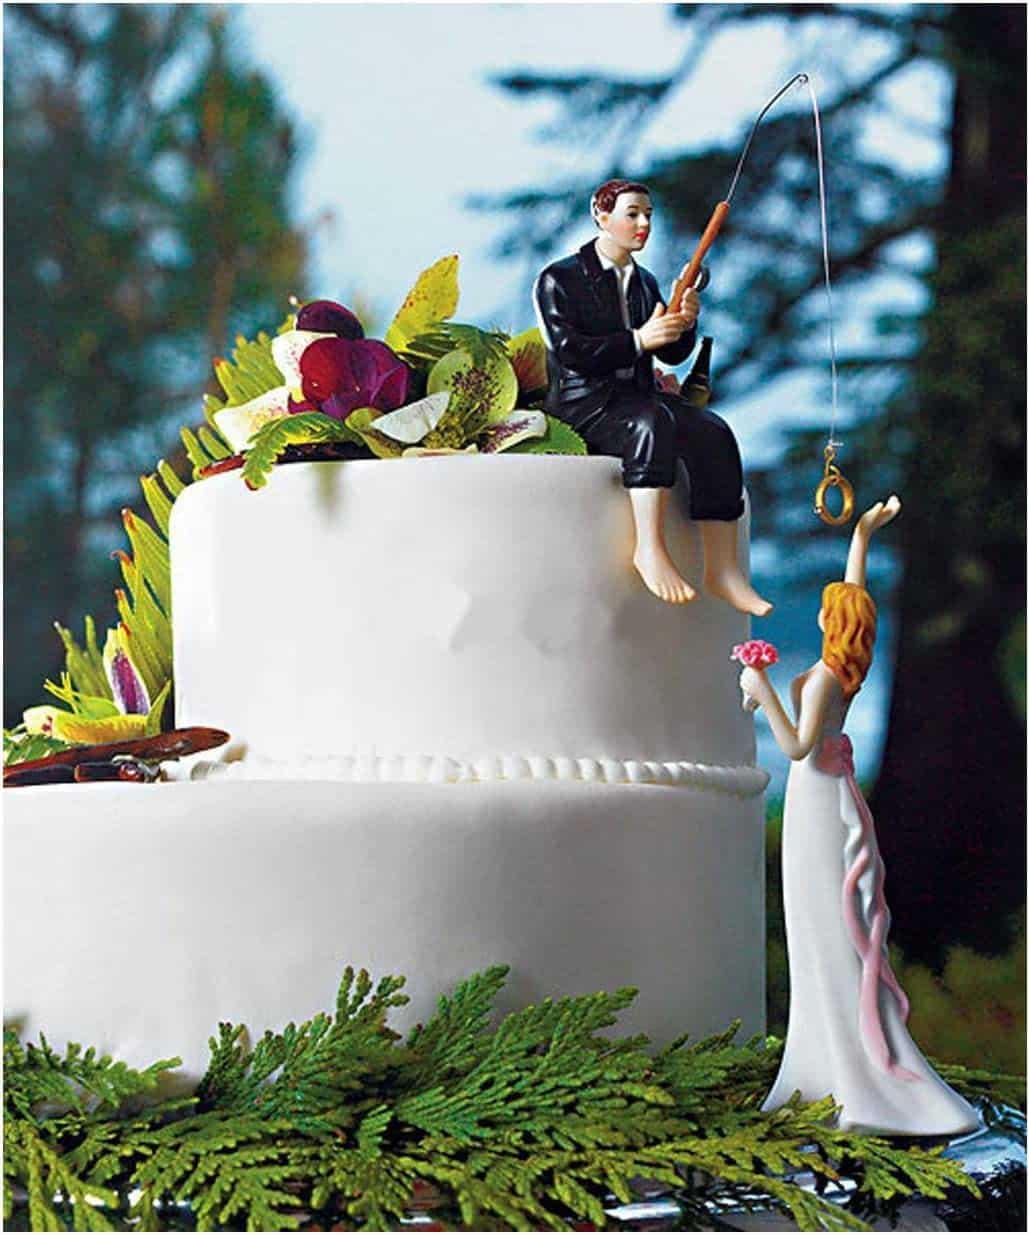 Amazon.com: Funny Wedding Cake Toppers Fishing Groom and Bride Couple ...